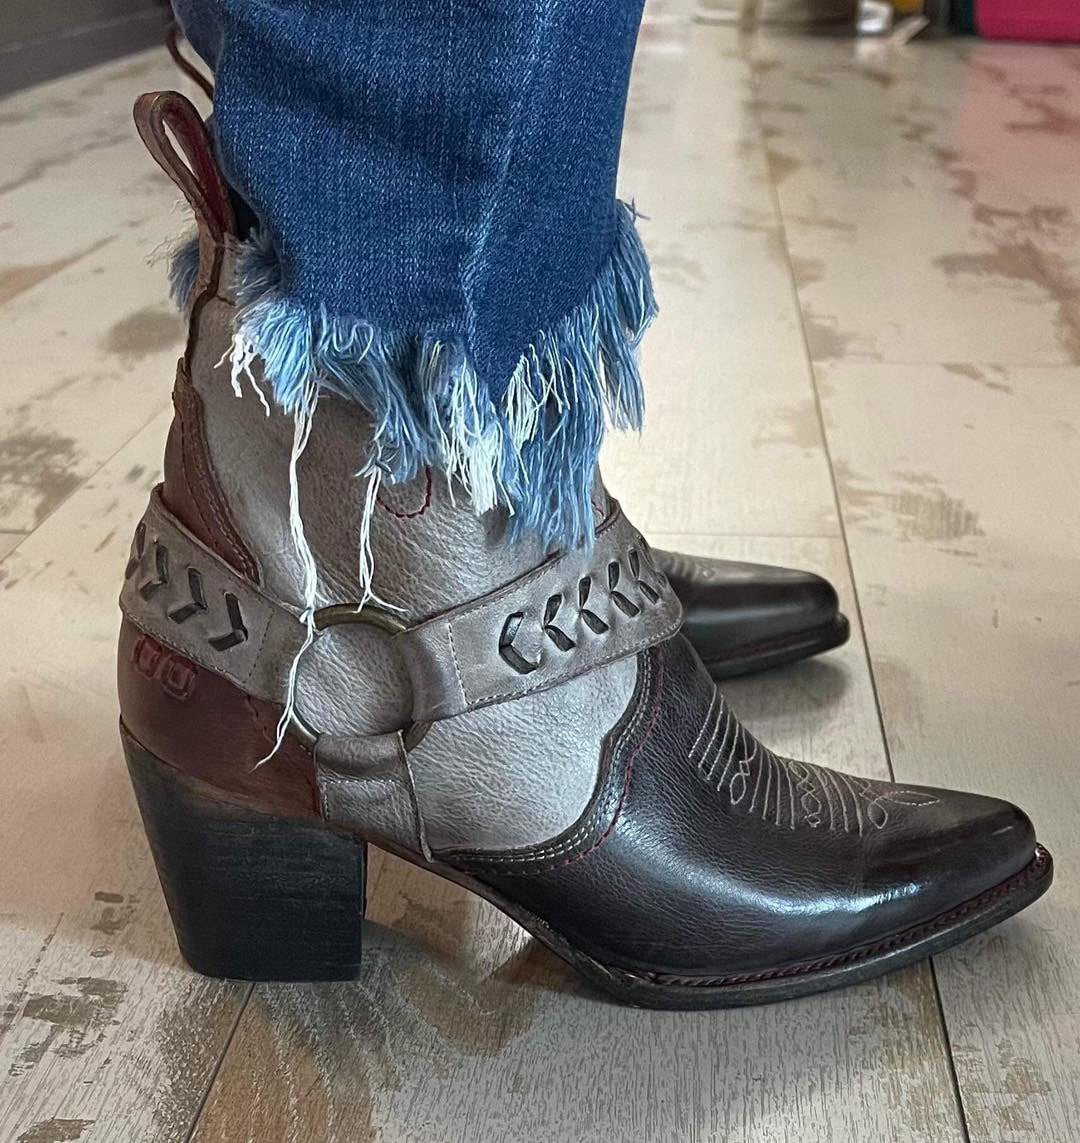 Tania Leather Boots